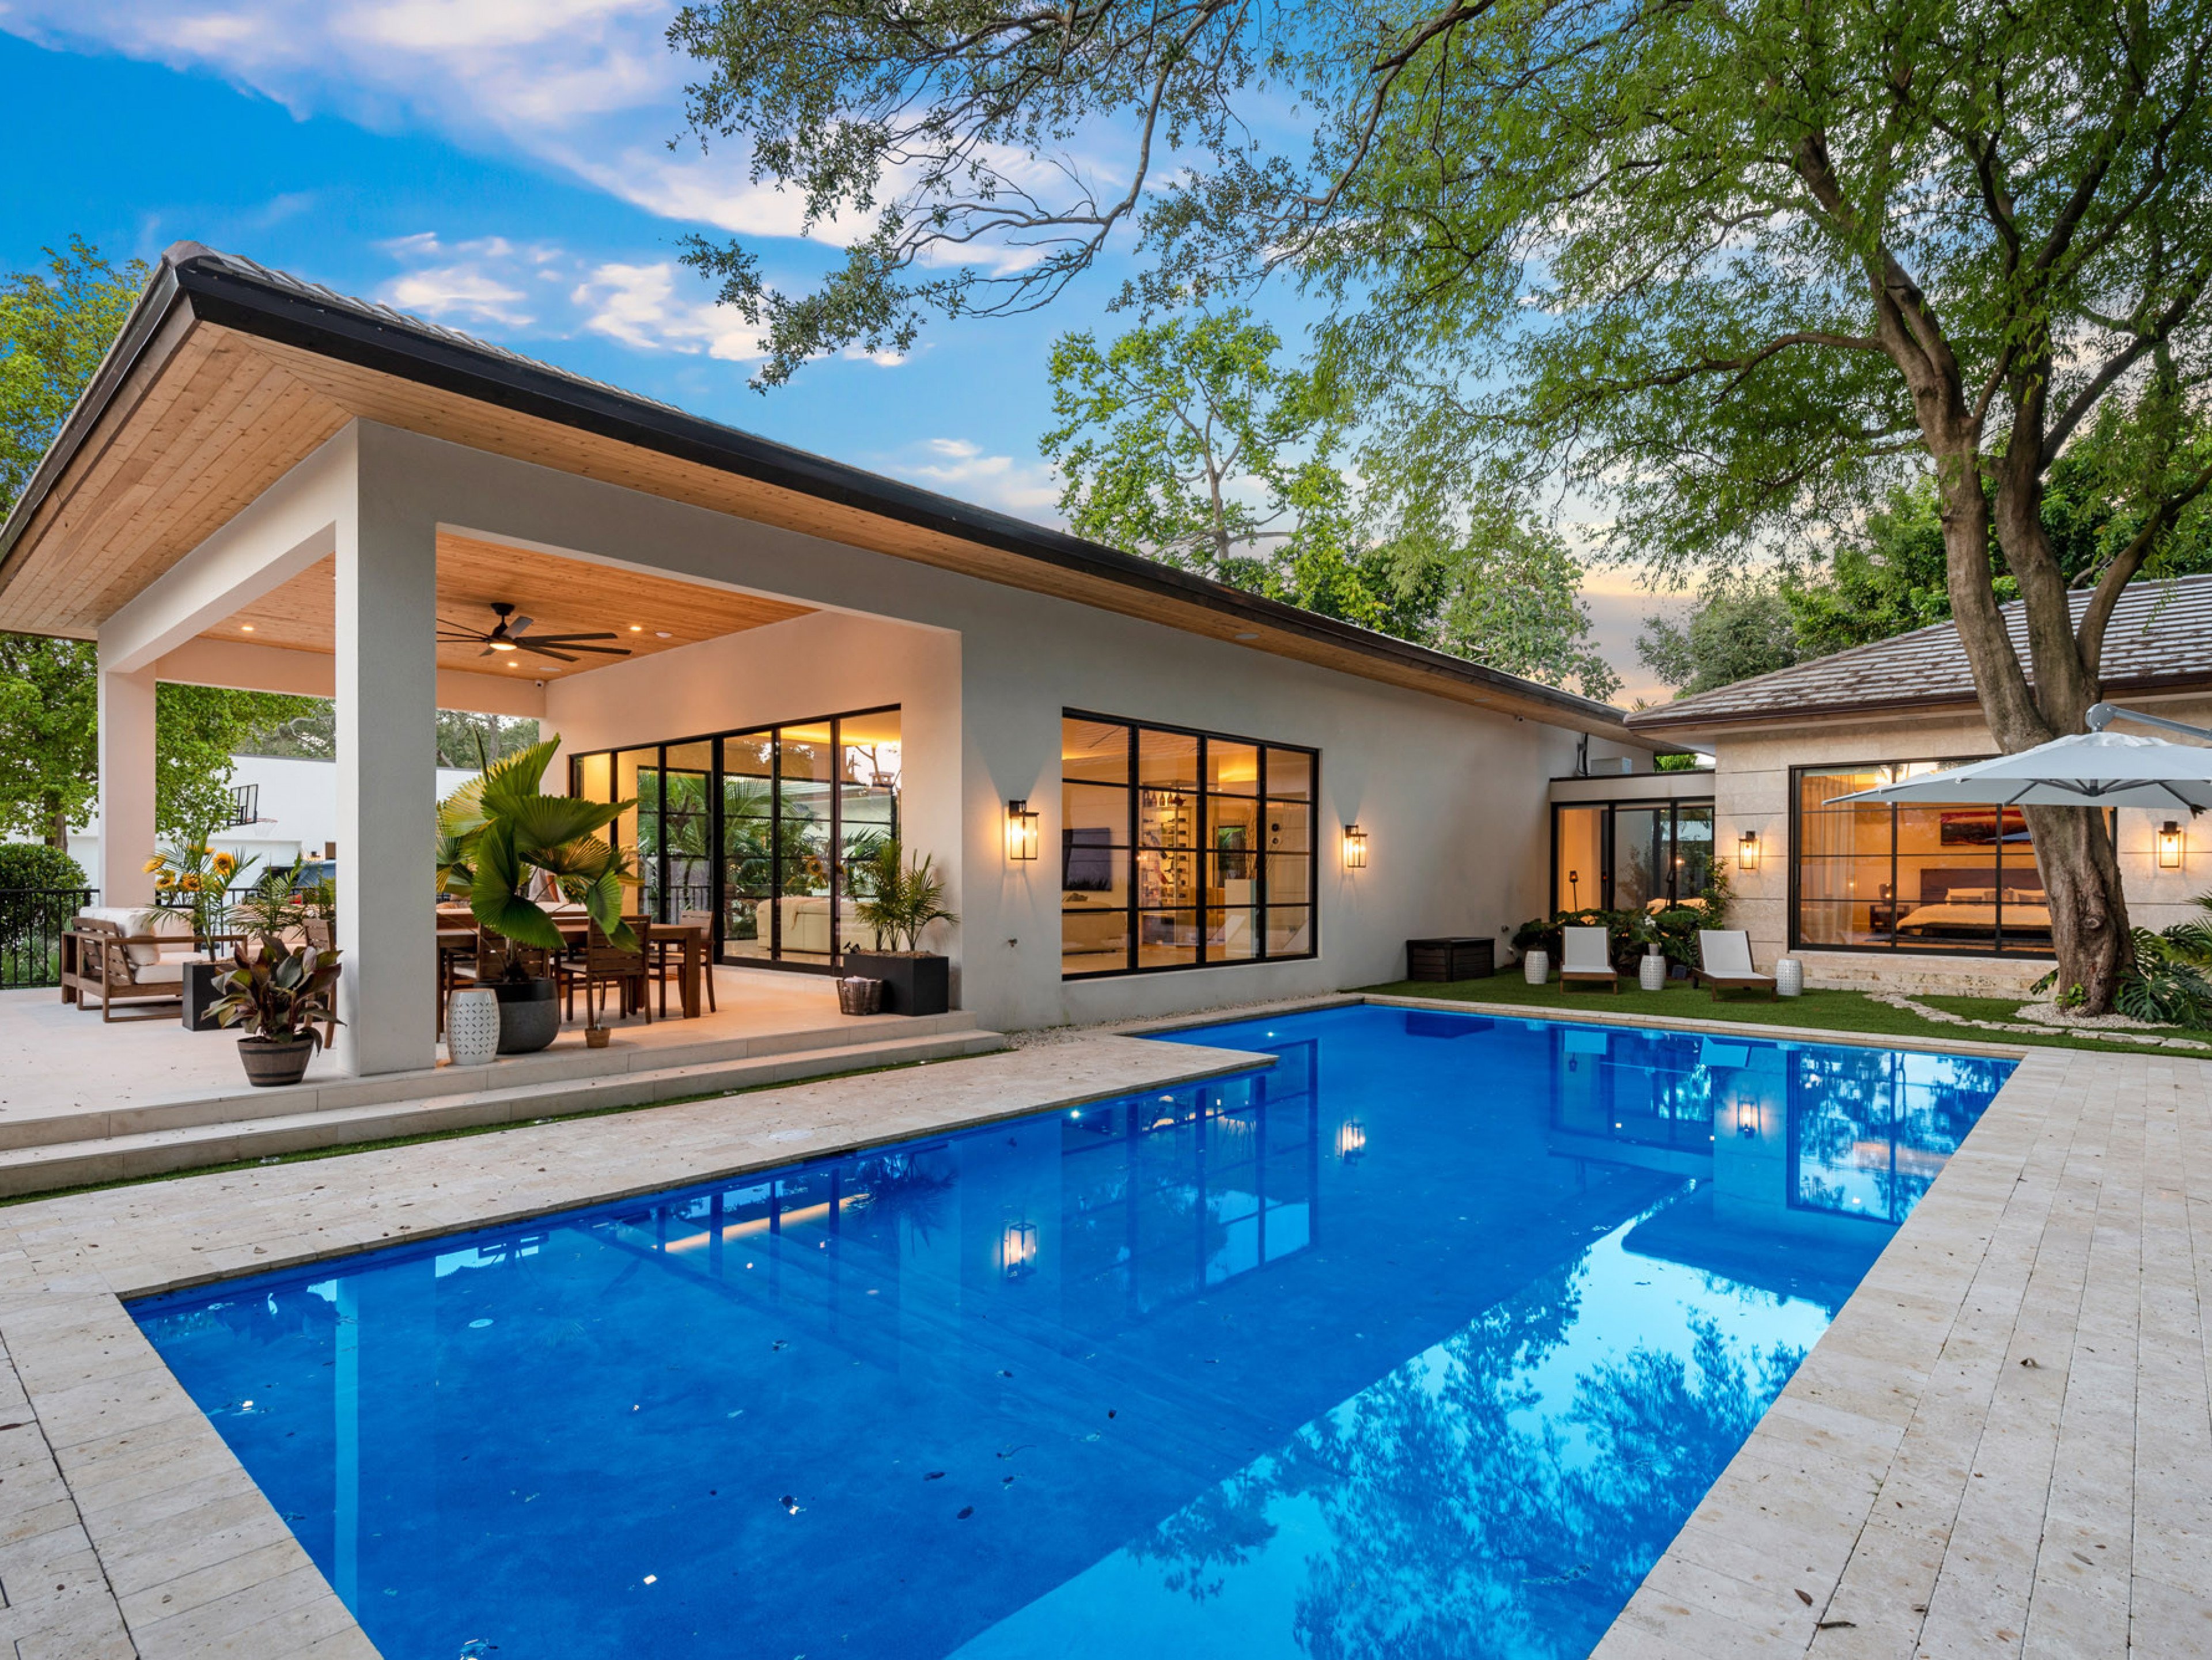 Miami 15 Miami vacation rentals with private pools